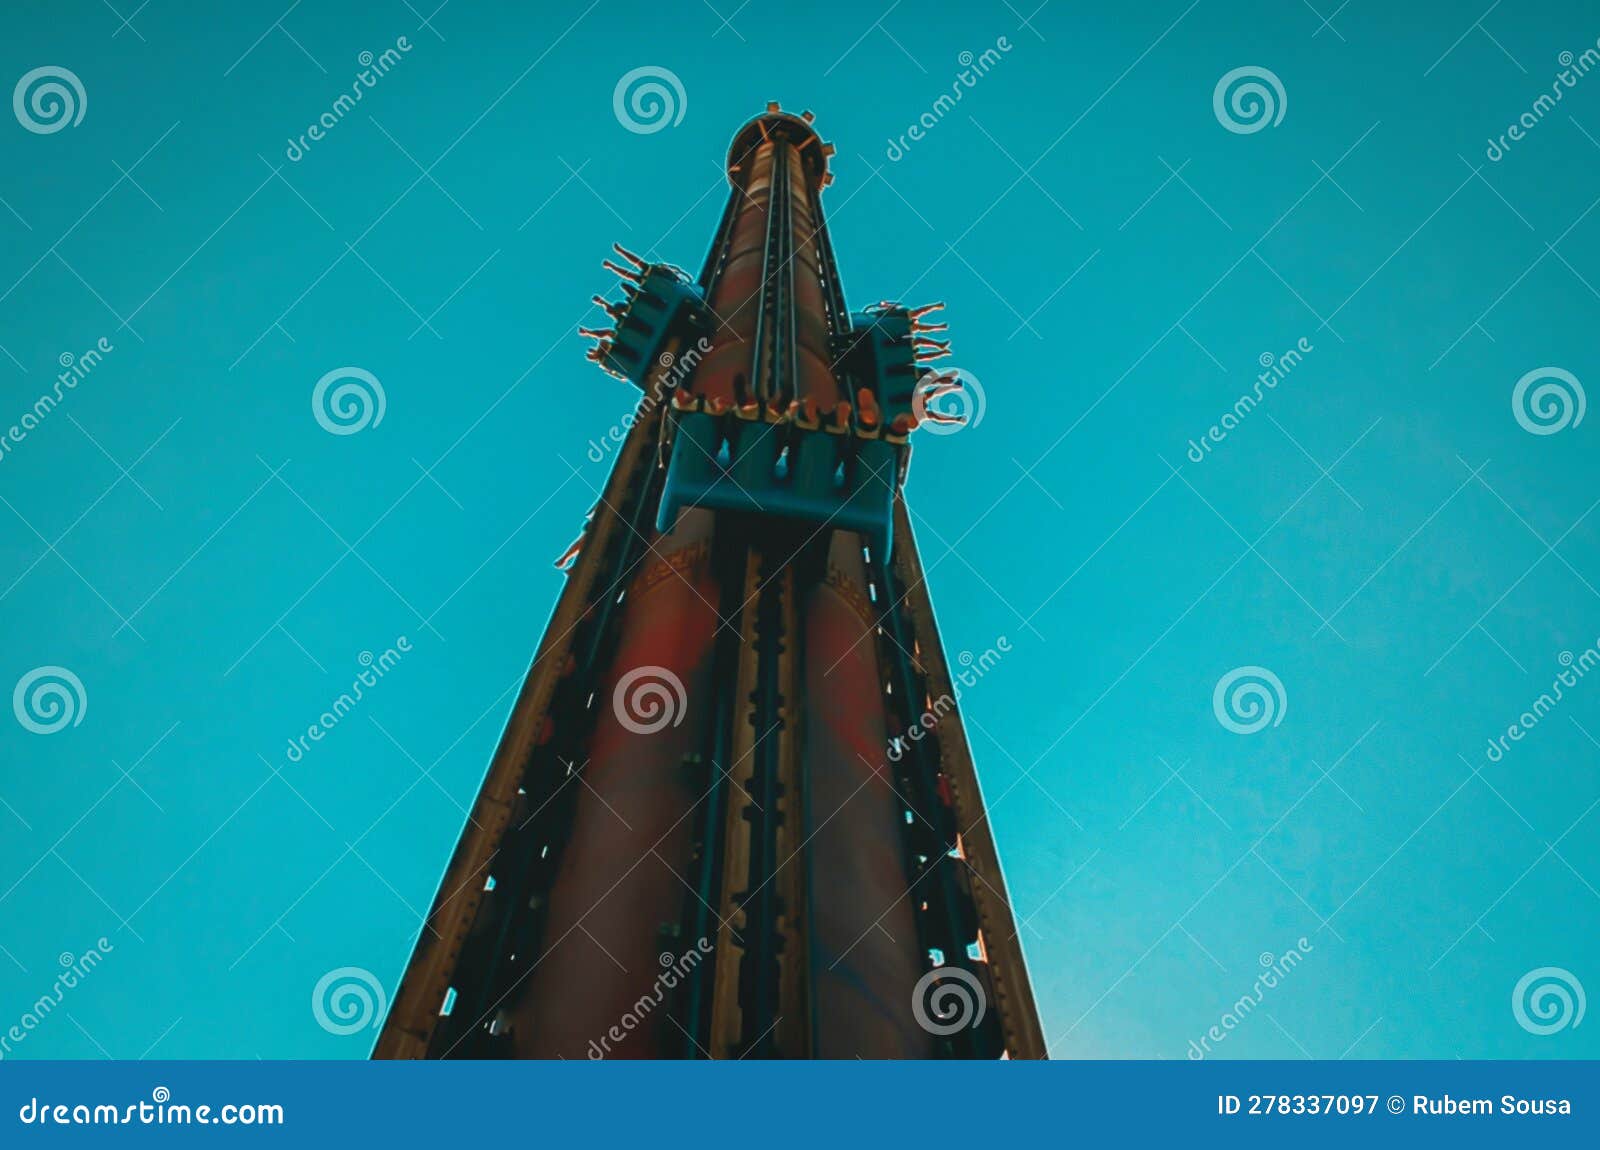 BIG TOWER BETO CARRERO 